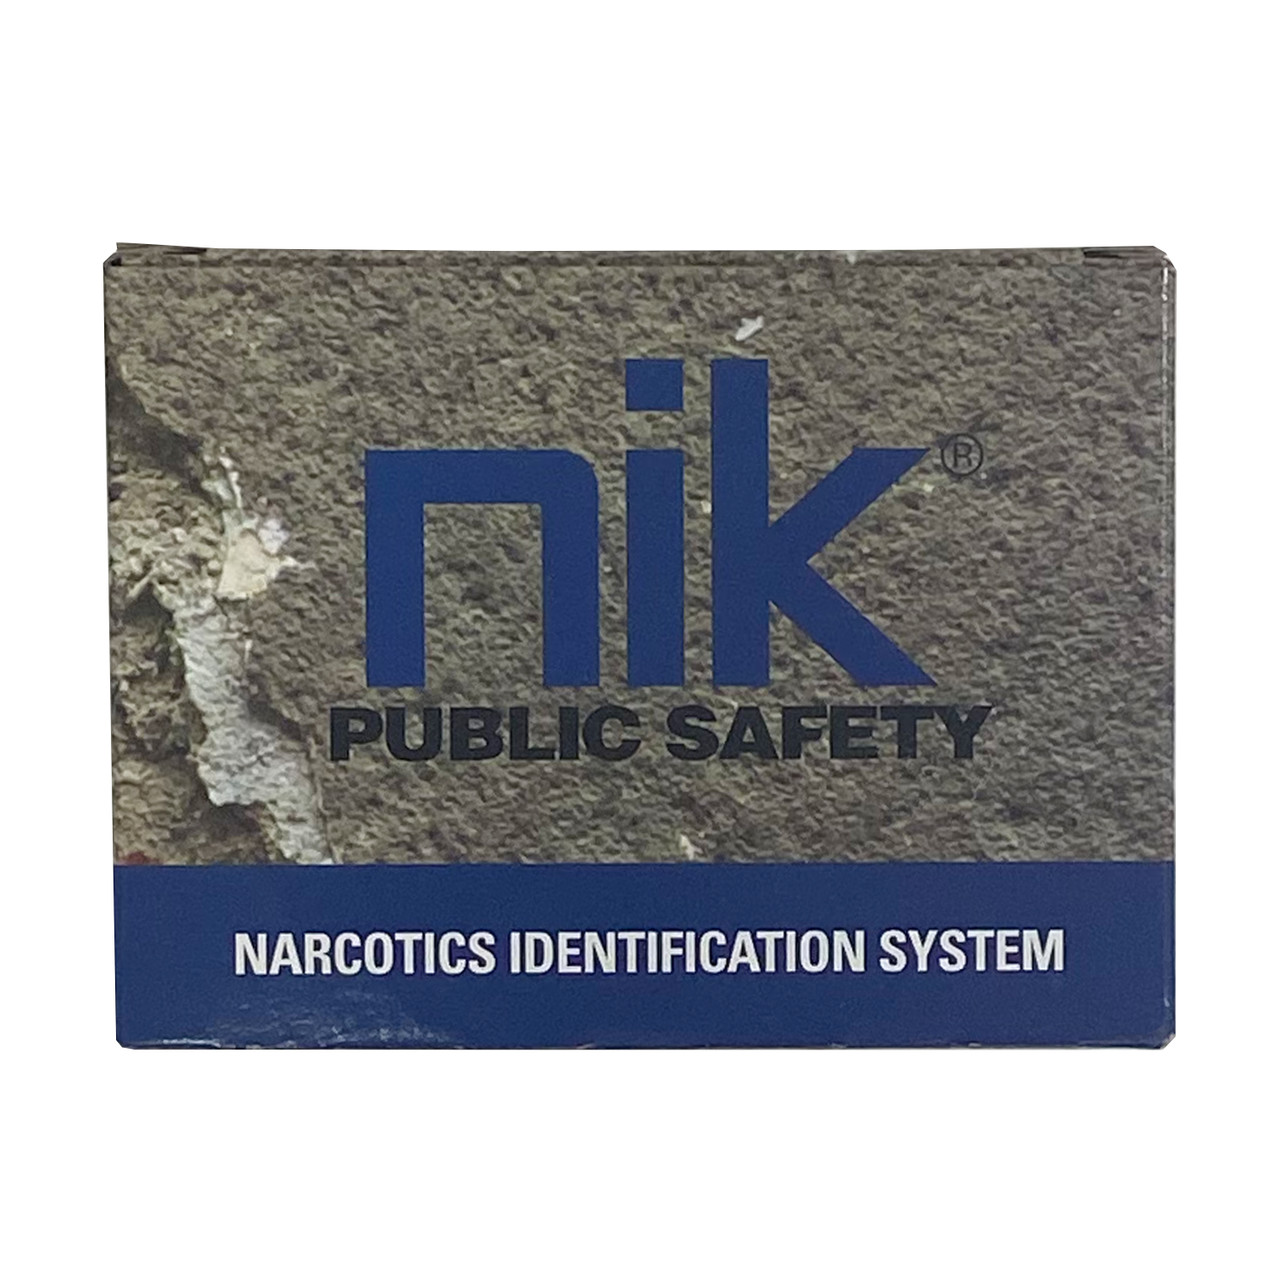 NARK II Hemp/CBD Screening Test, NARK II Presumptive Narcotics Test  Pouches, Forensic Supplies